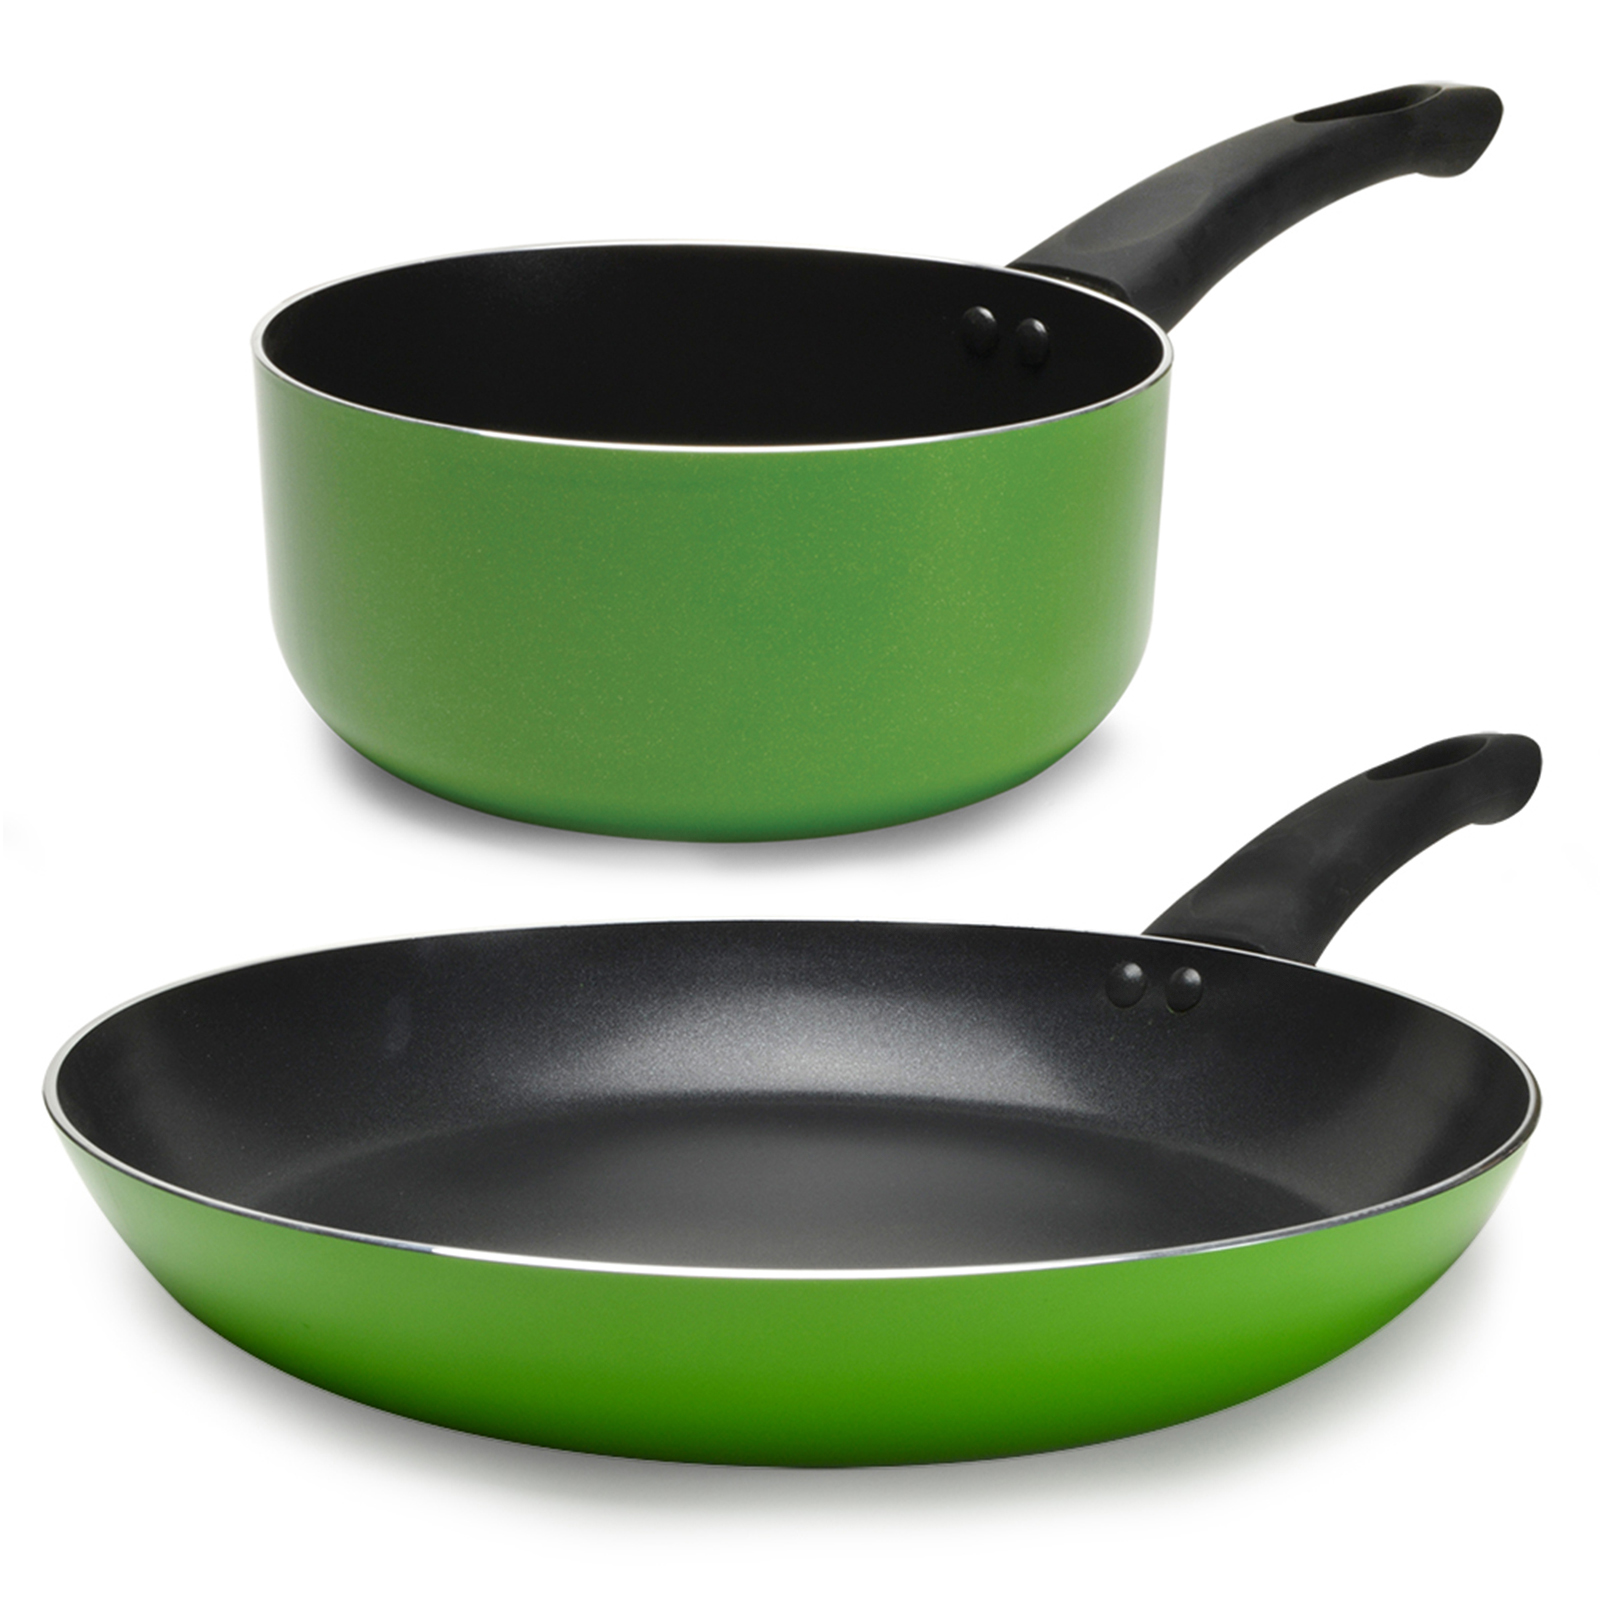 Elements 2PC Cookware Set - Green